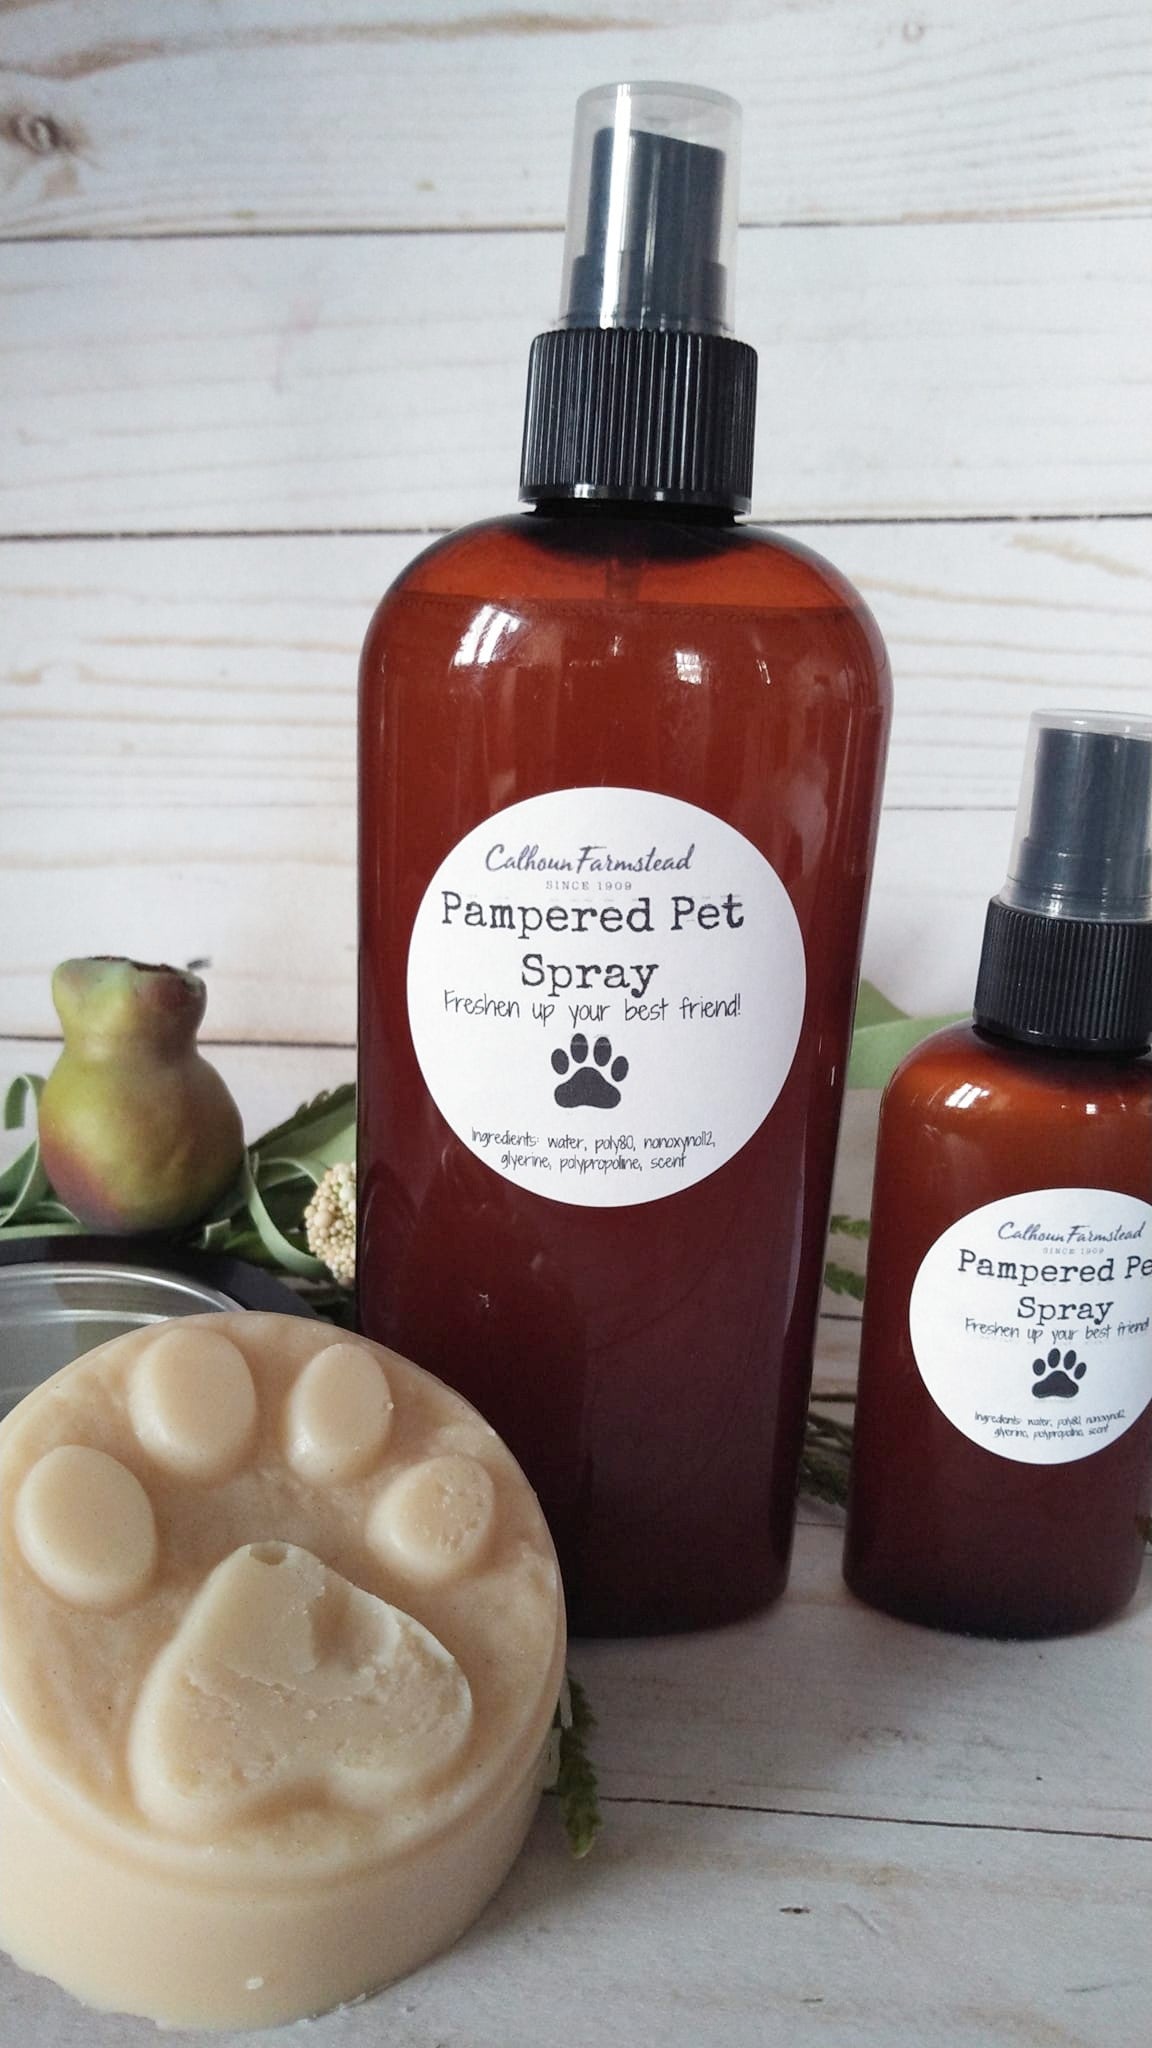 pet products - natural pet products - natural dog products - dog shampoo - pampering pets - dog grooming